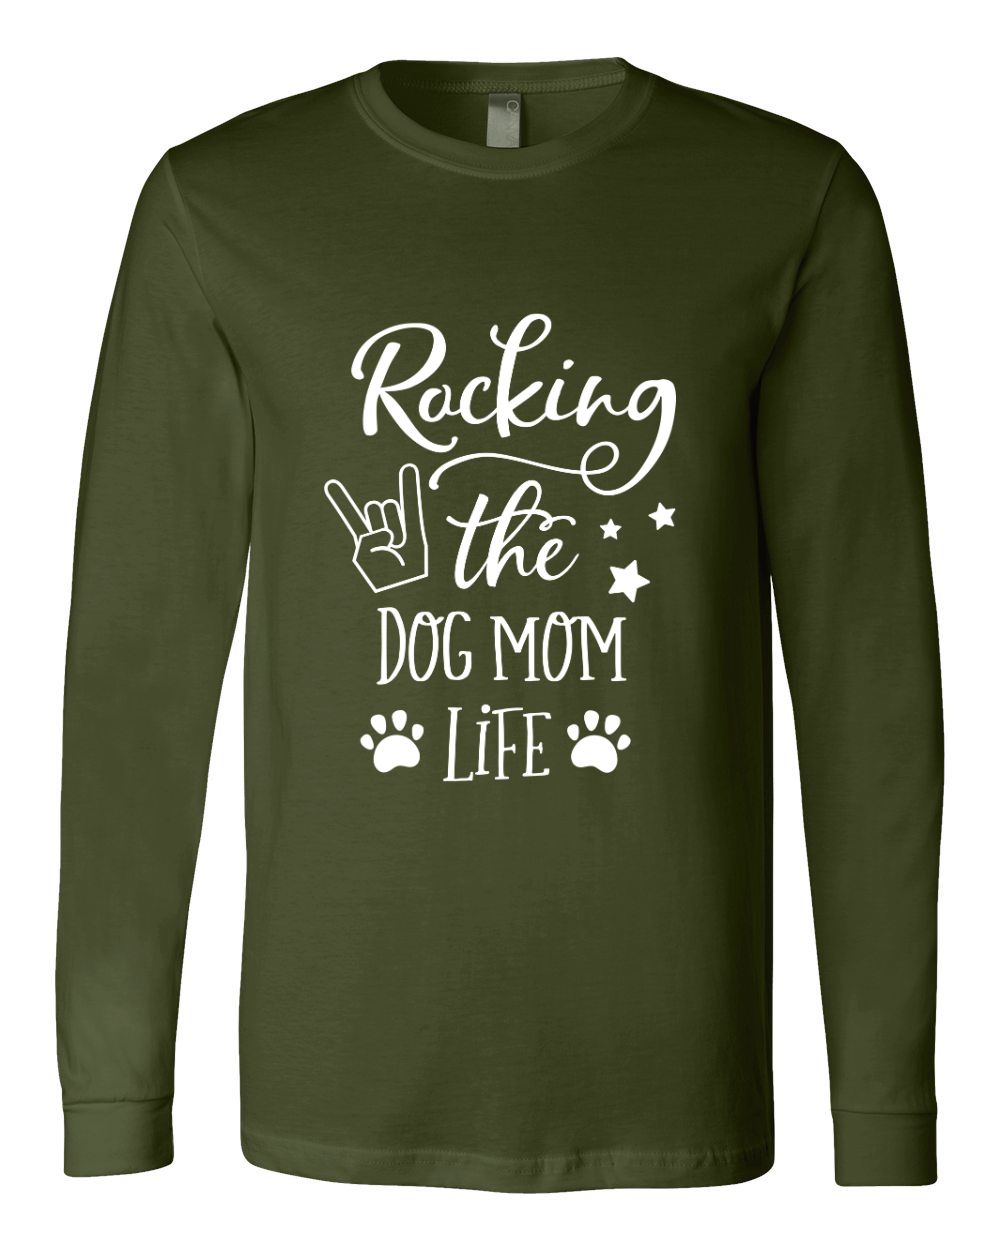 Rocking The Dog Mom Life Long Sleeves